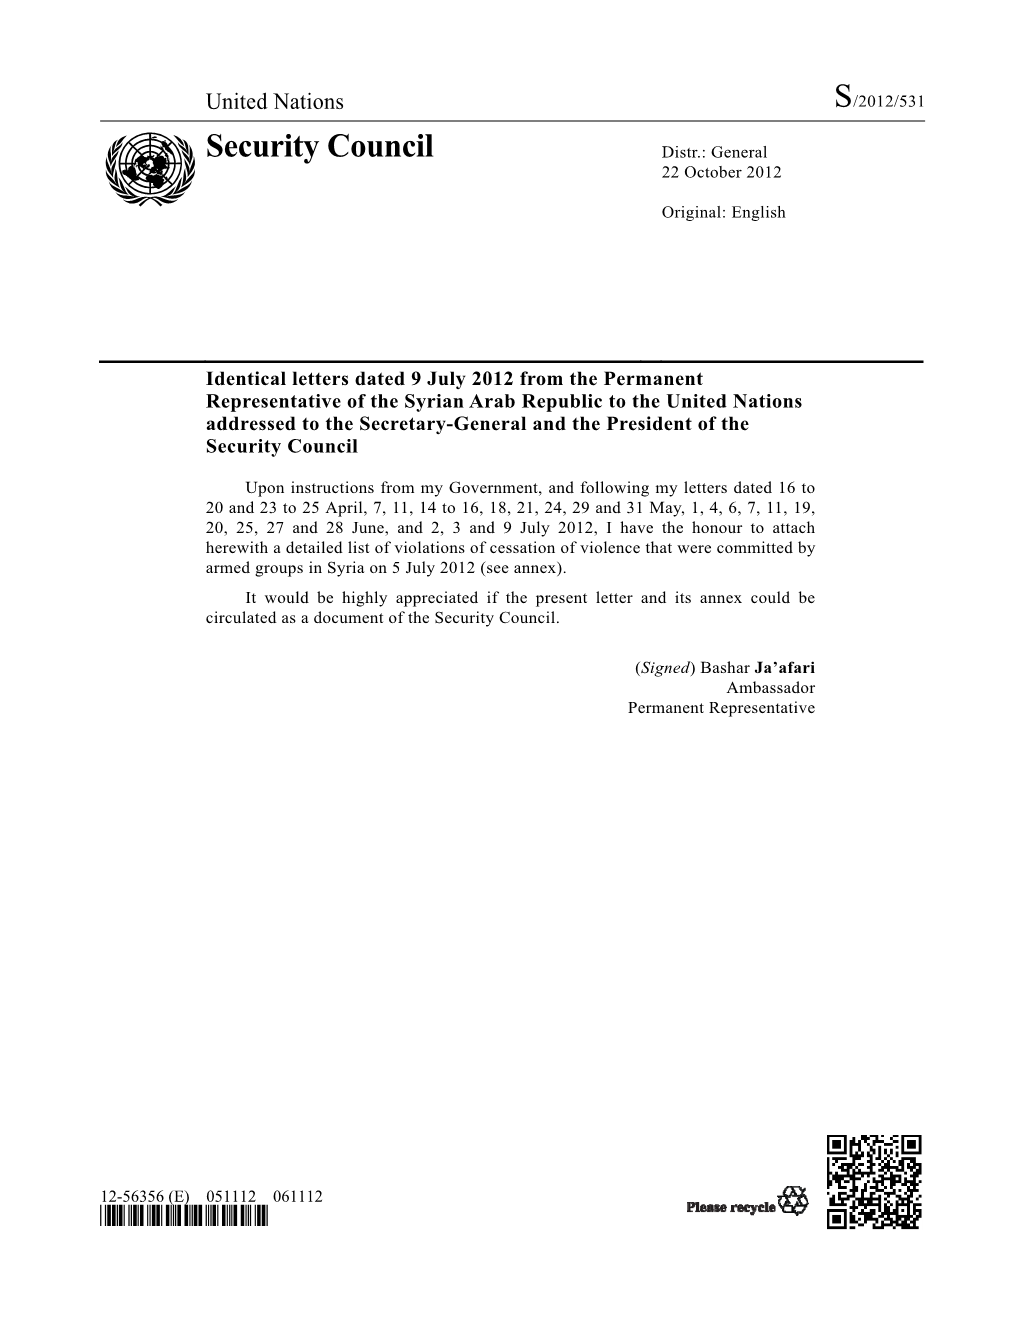 Security Council Distr.: General 22 October 2012